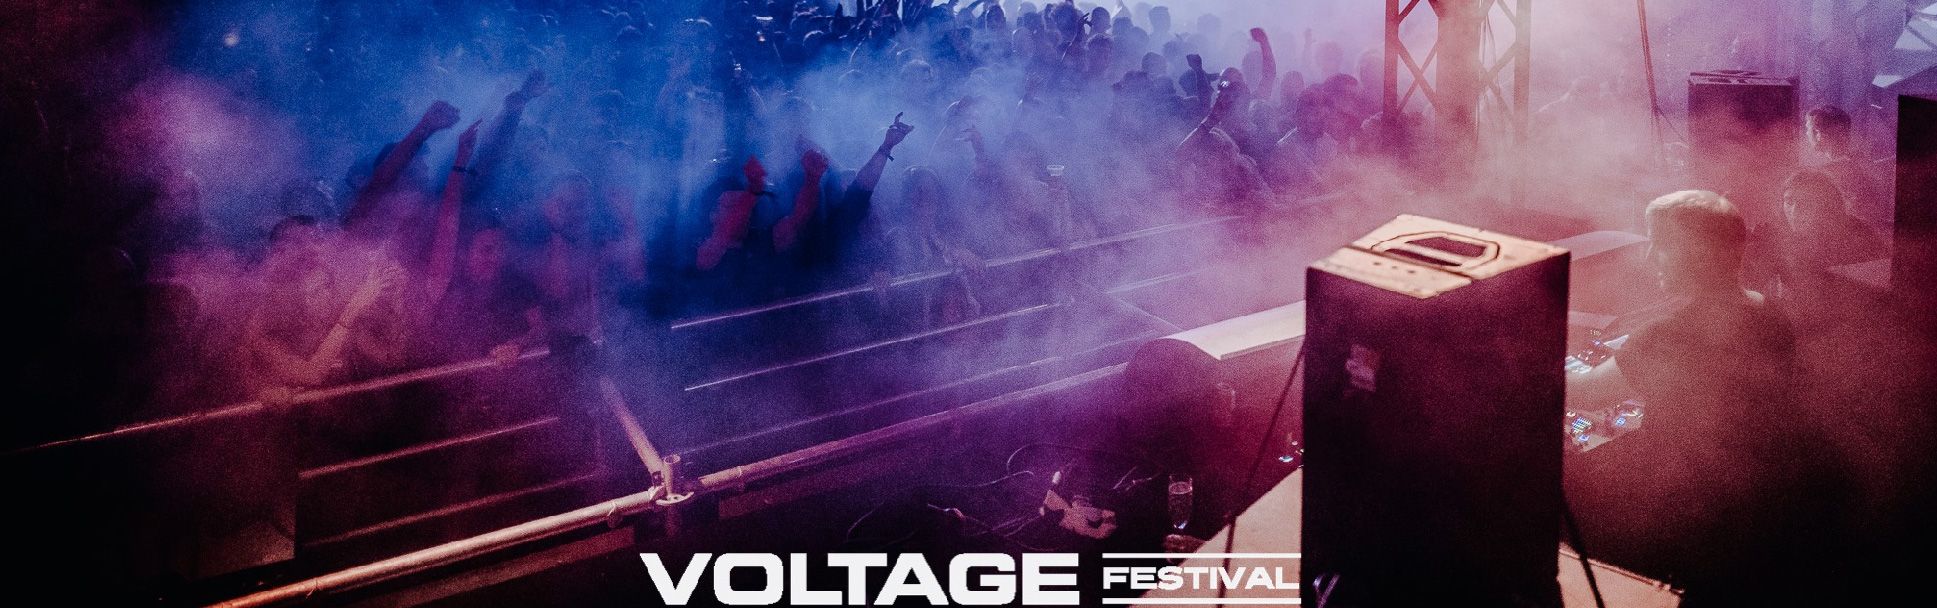 Voltage Festival header